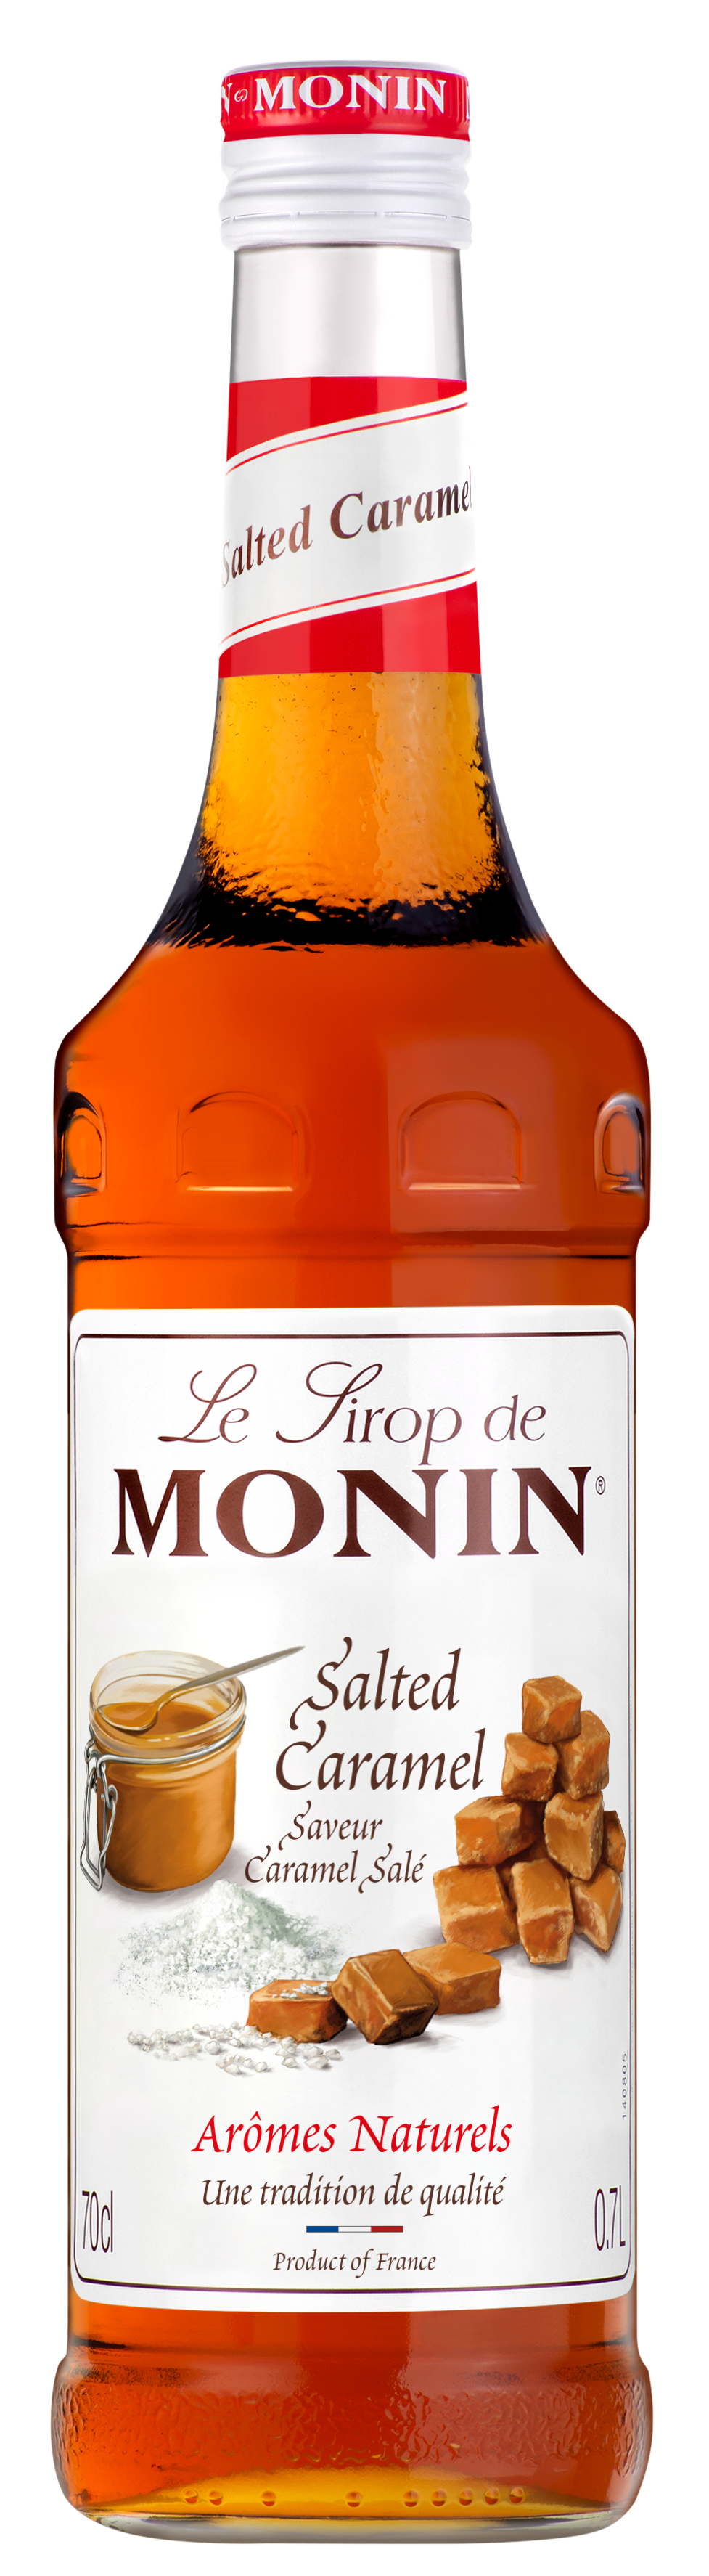 MONIN Salted Caramel Syrup